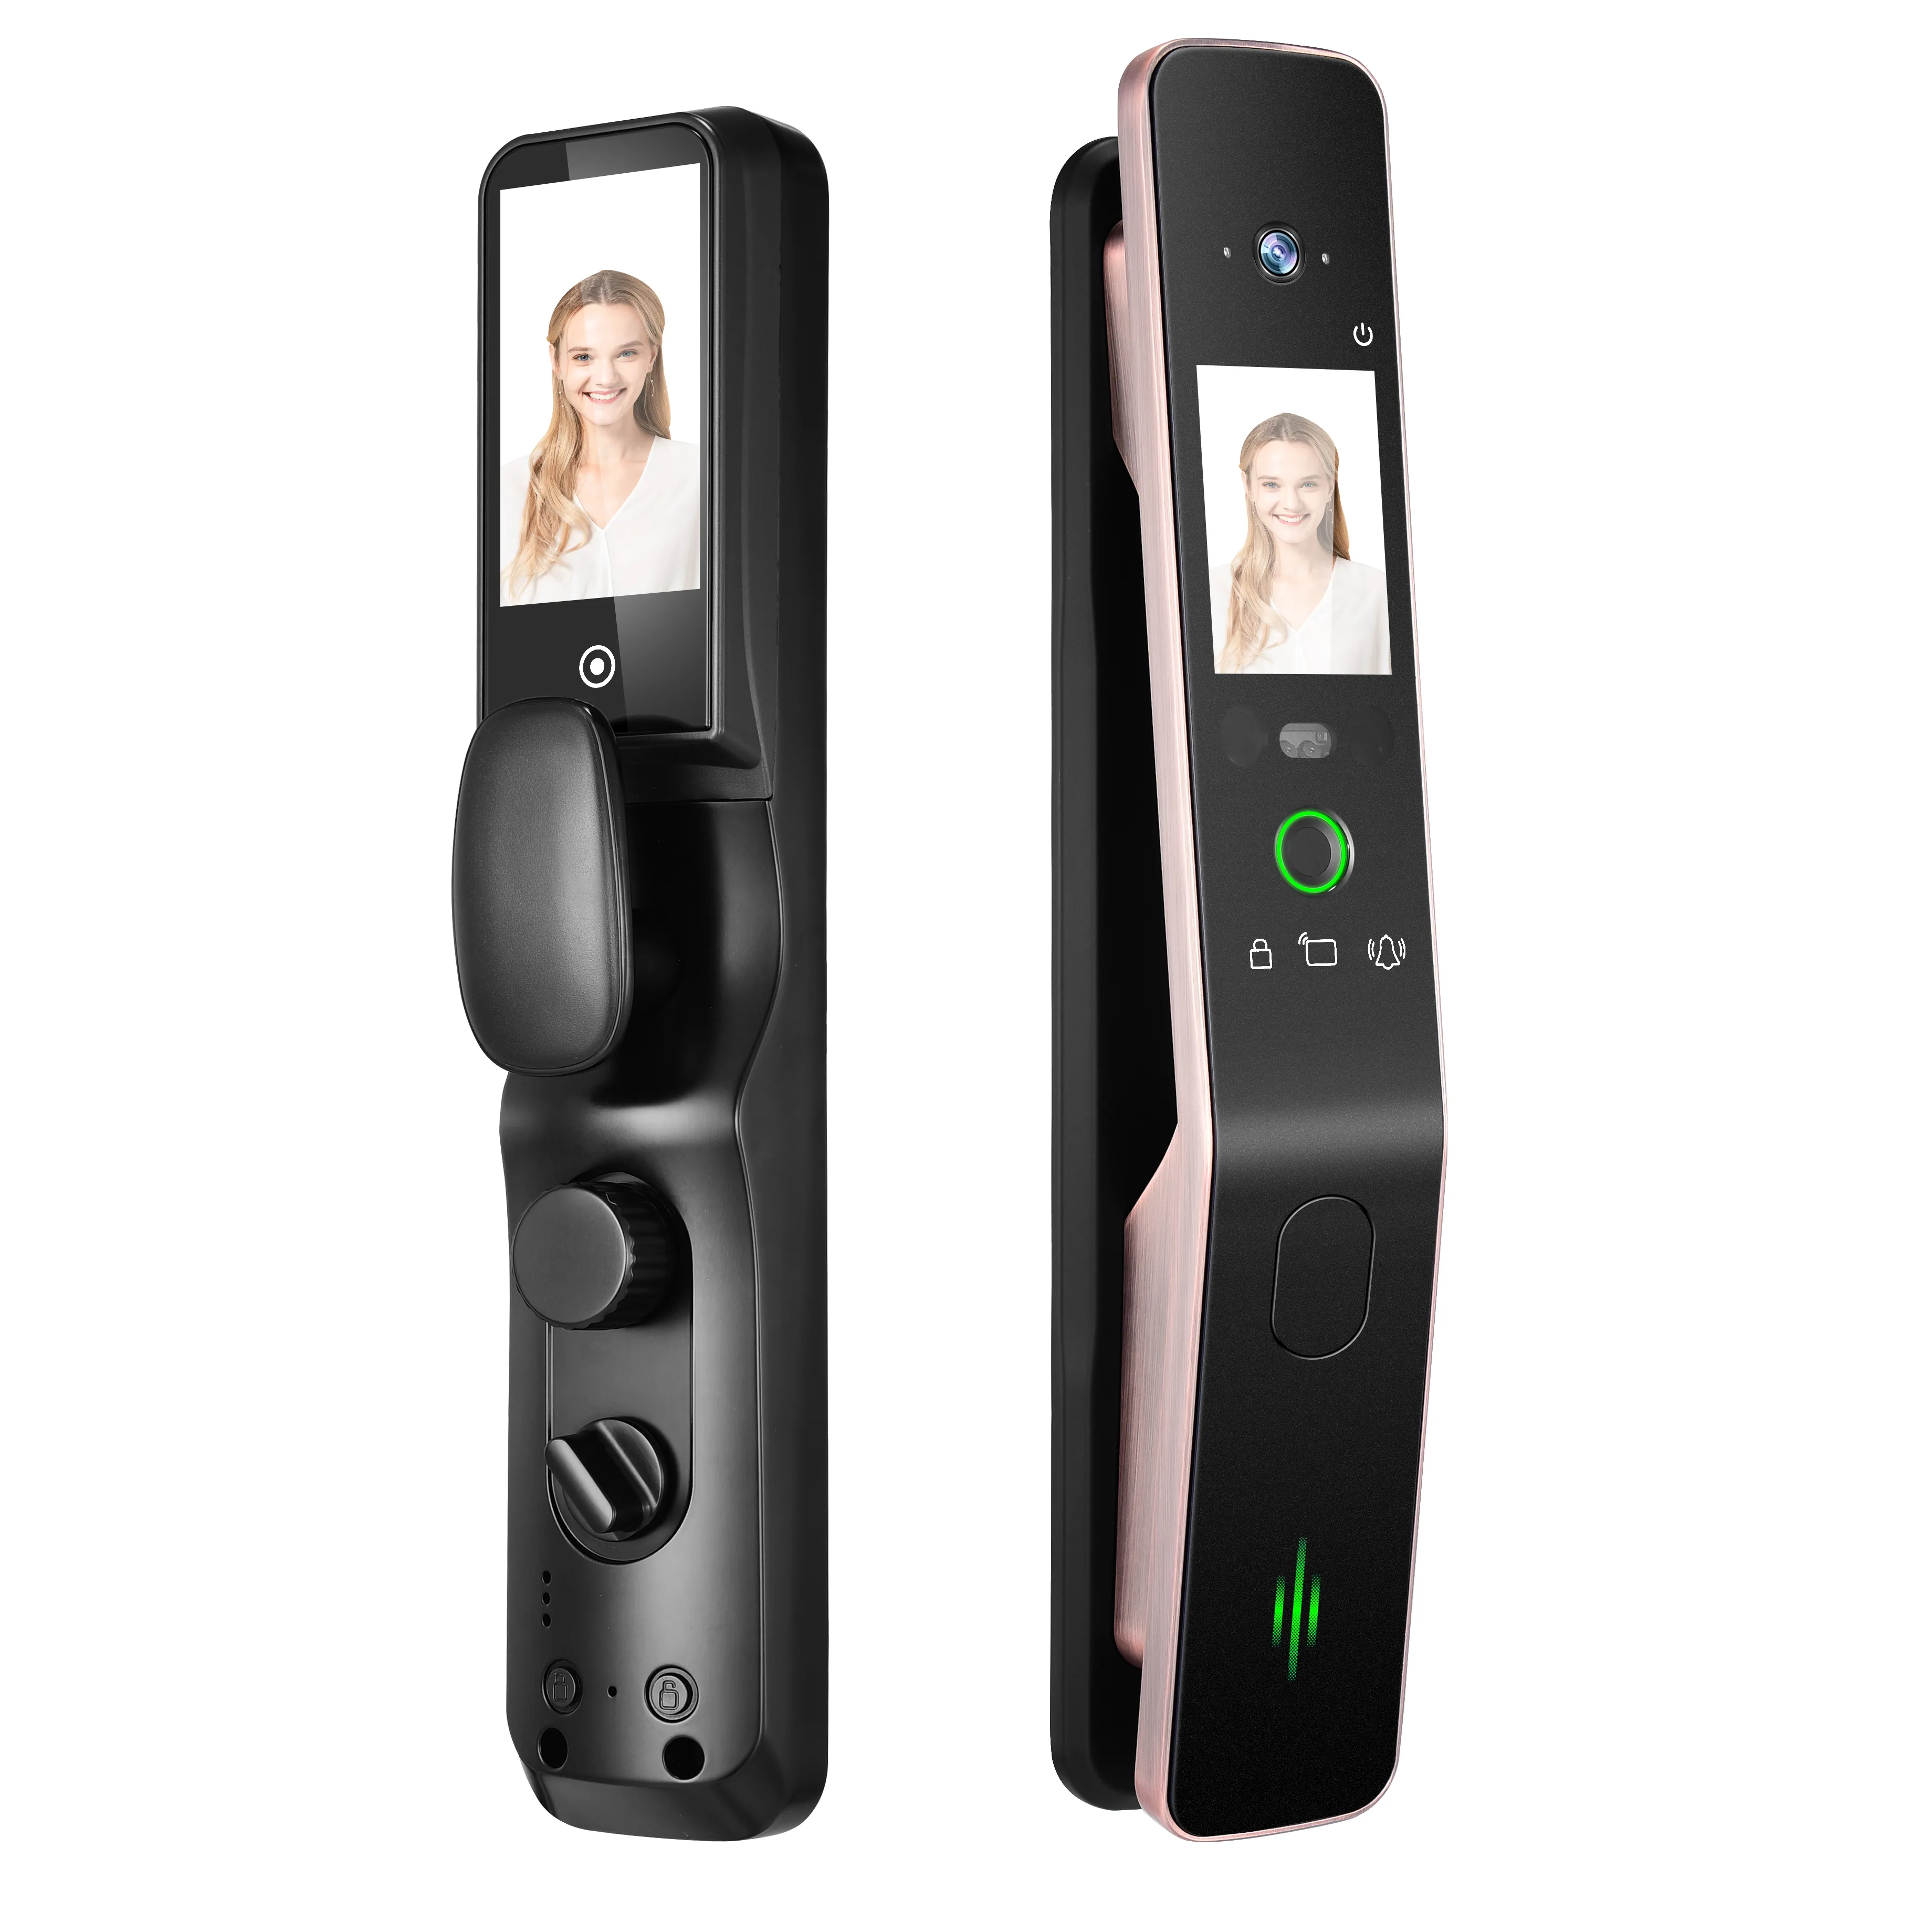 Desain Baru Layar Ganda Monitor 24 Jam Video Interkom Kunci Pintar Kamera Buatan 3D Pindai Wajah & Telapak Tangan dengan Audio 2 Arah